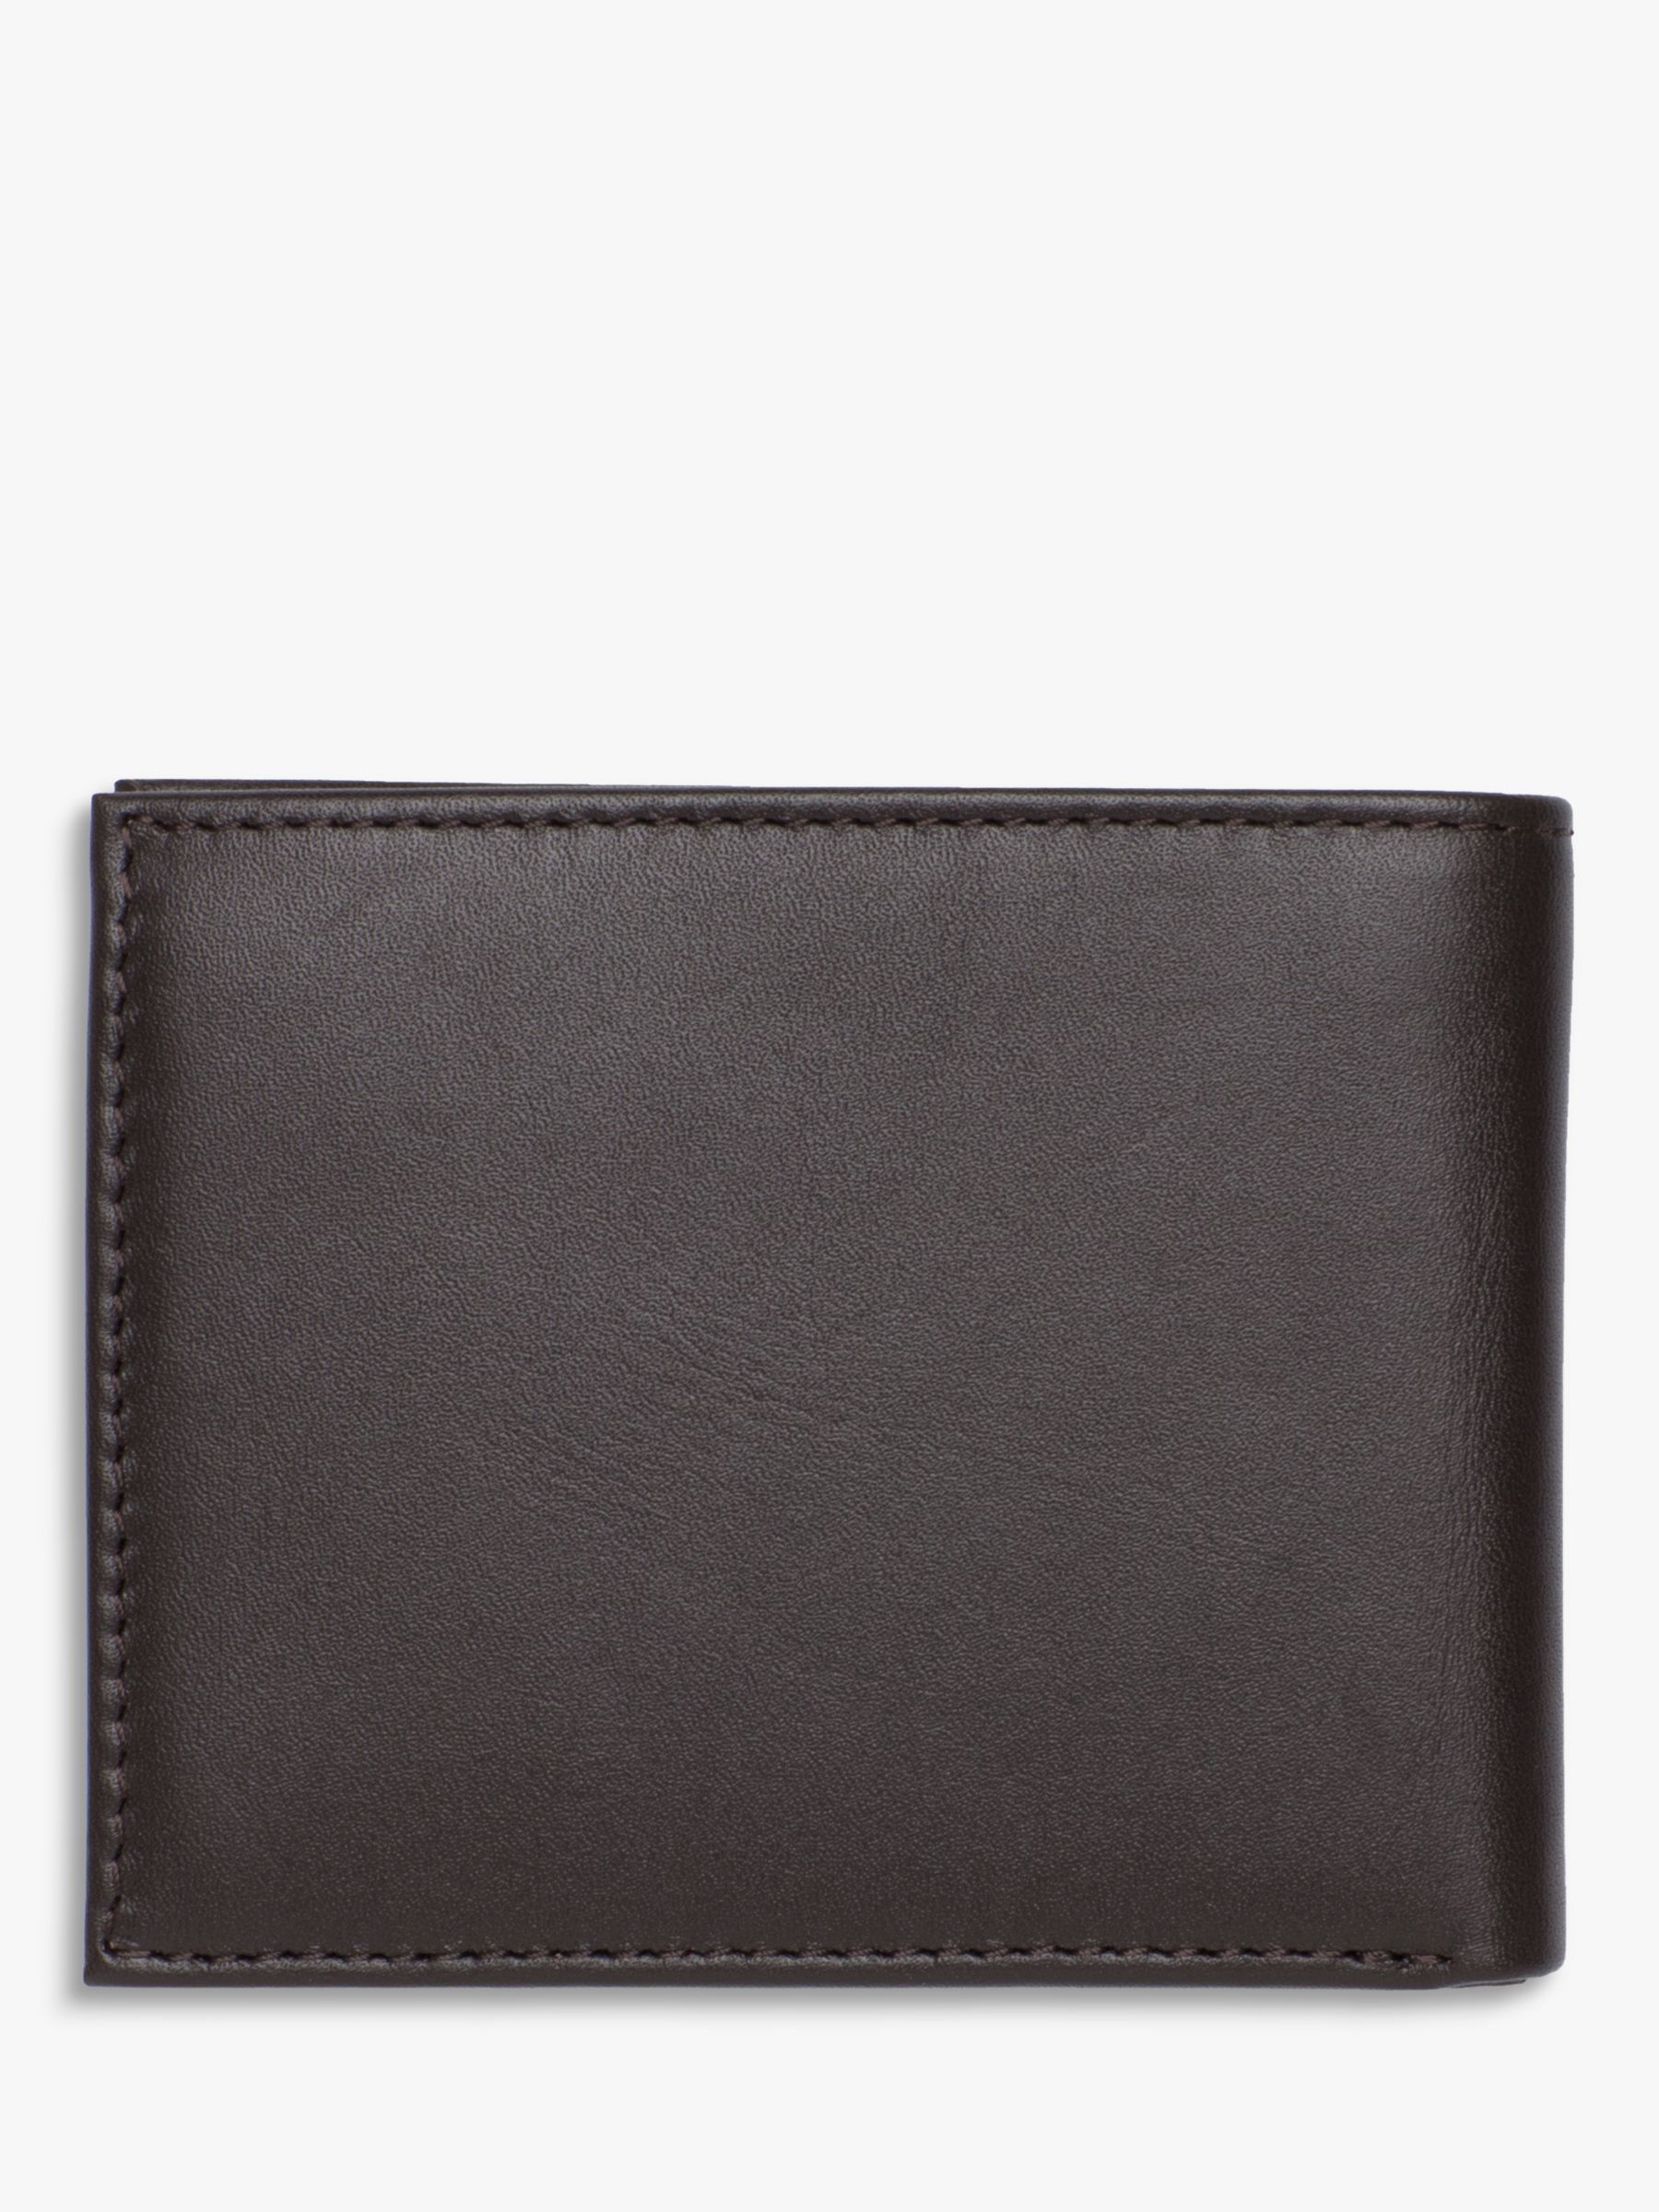 Tommy Hilfiger Eton Leather Mini Wallet, Brown